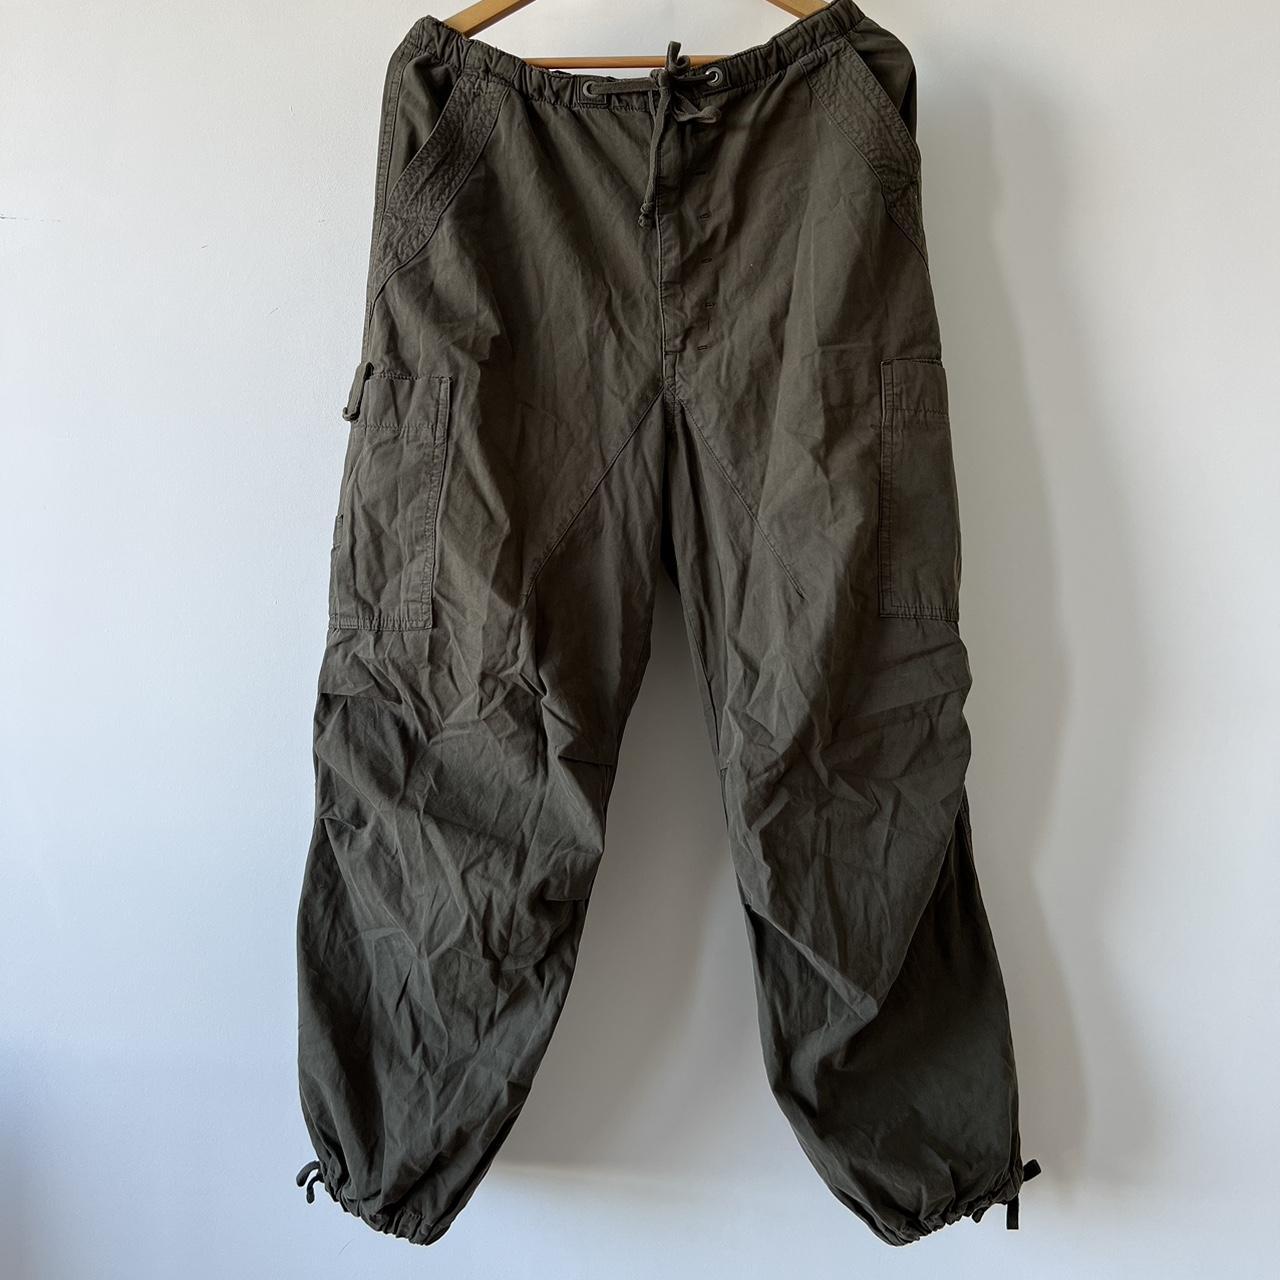 Jaded London - Parachute pants 🧵 Size: M 🧍 Model... - Depop